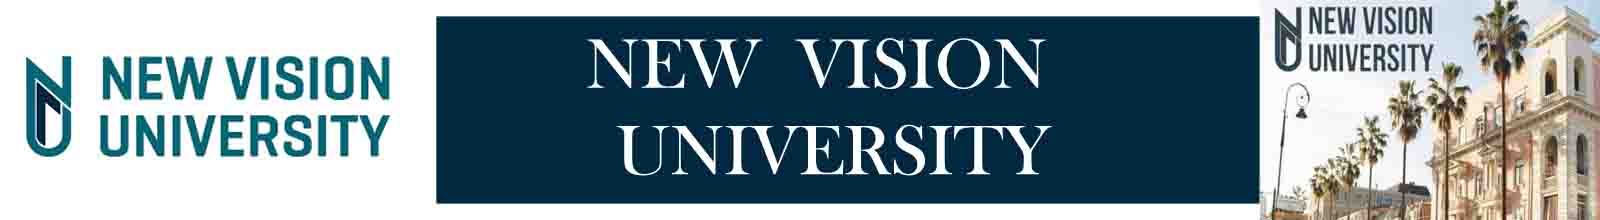 new vision university